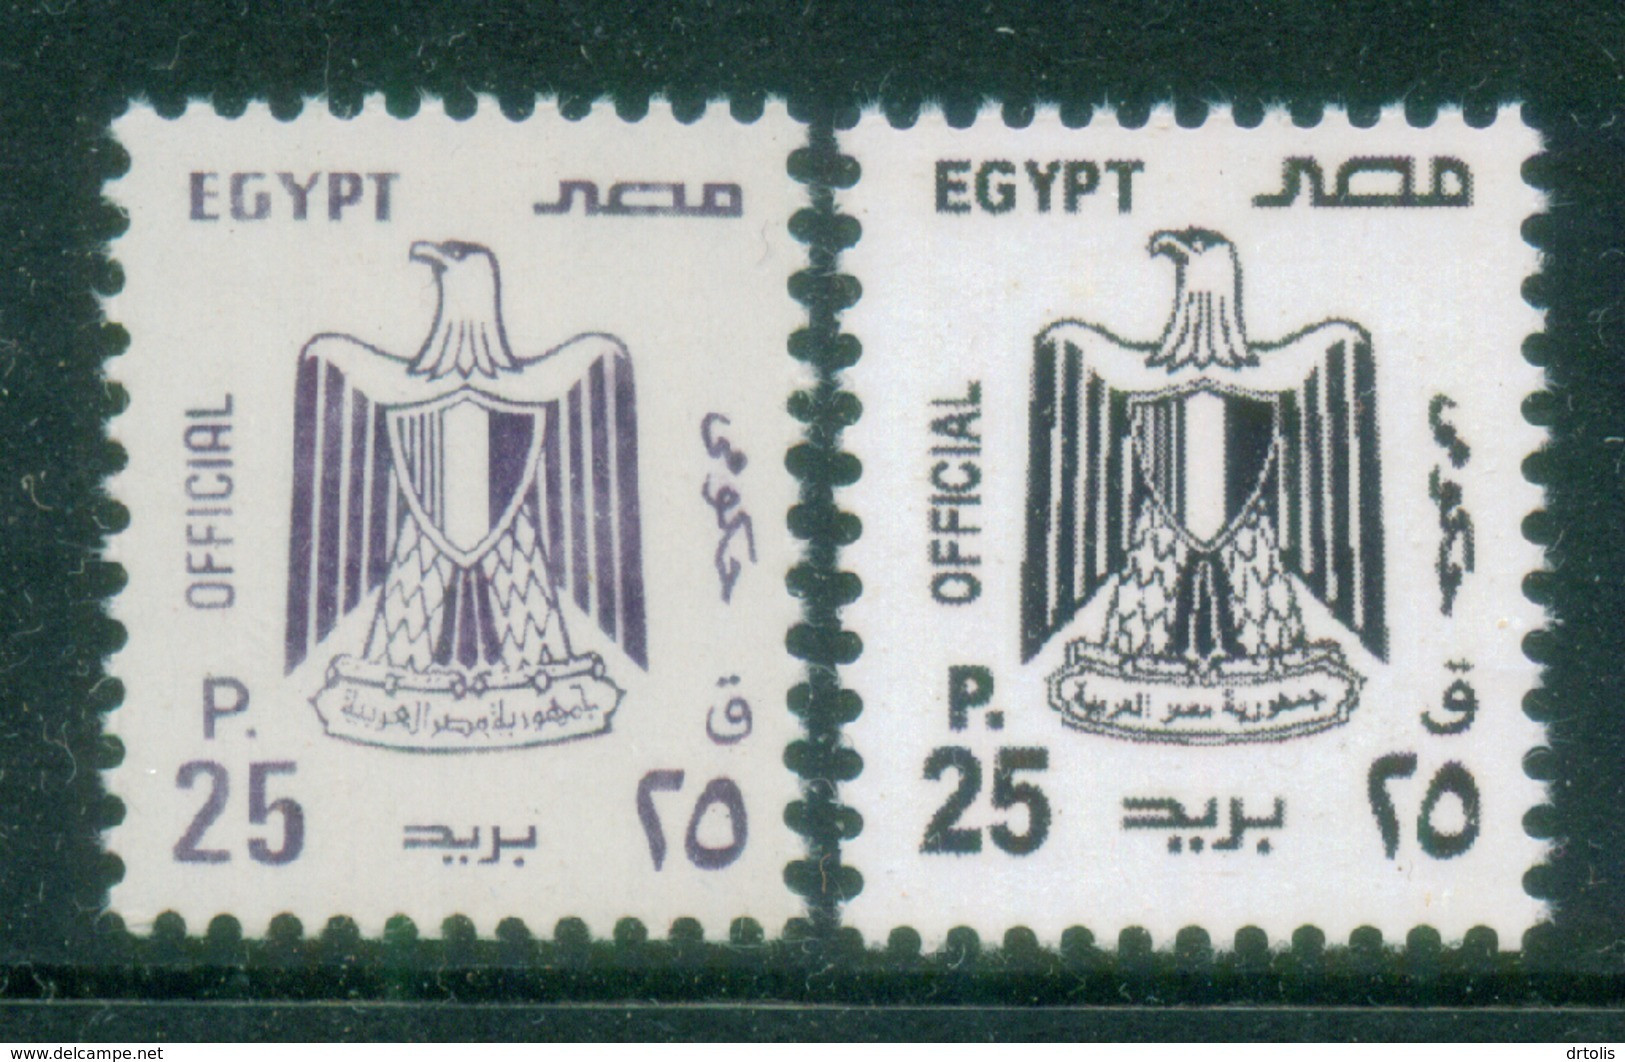 EGYPT / 2001 / OFFICIAL / 25 PT / NO WMK / VERY RARE : TYPE I & II / MNH / VF - Nuovi